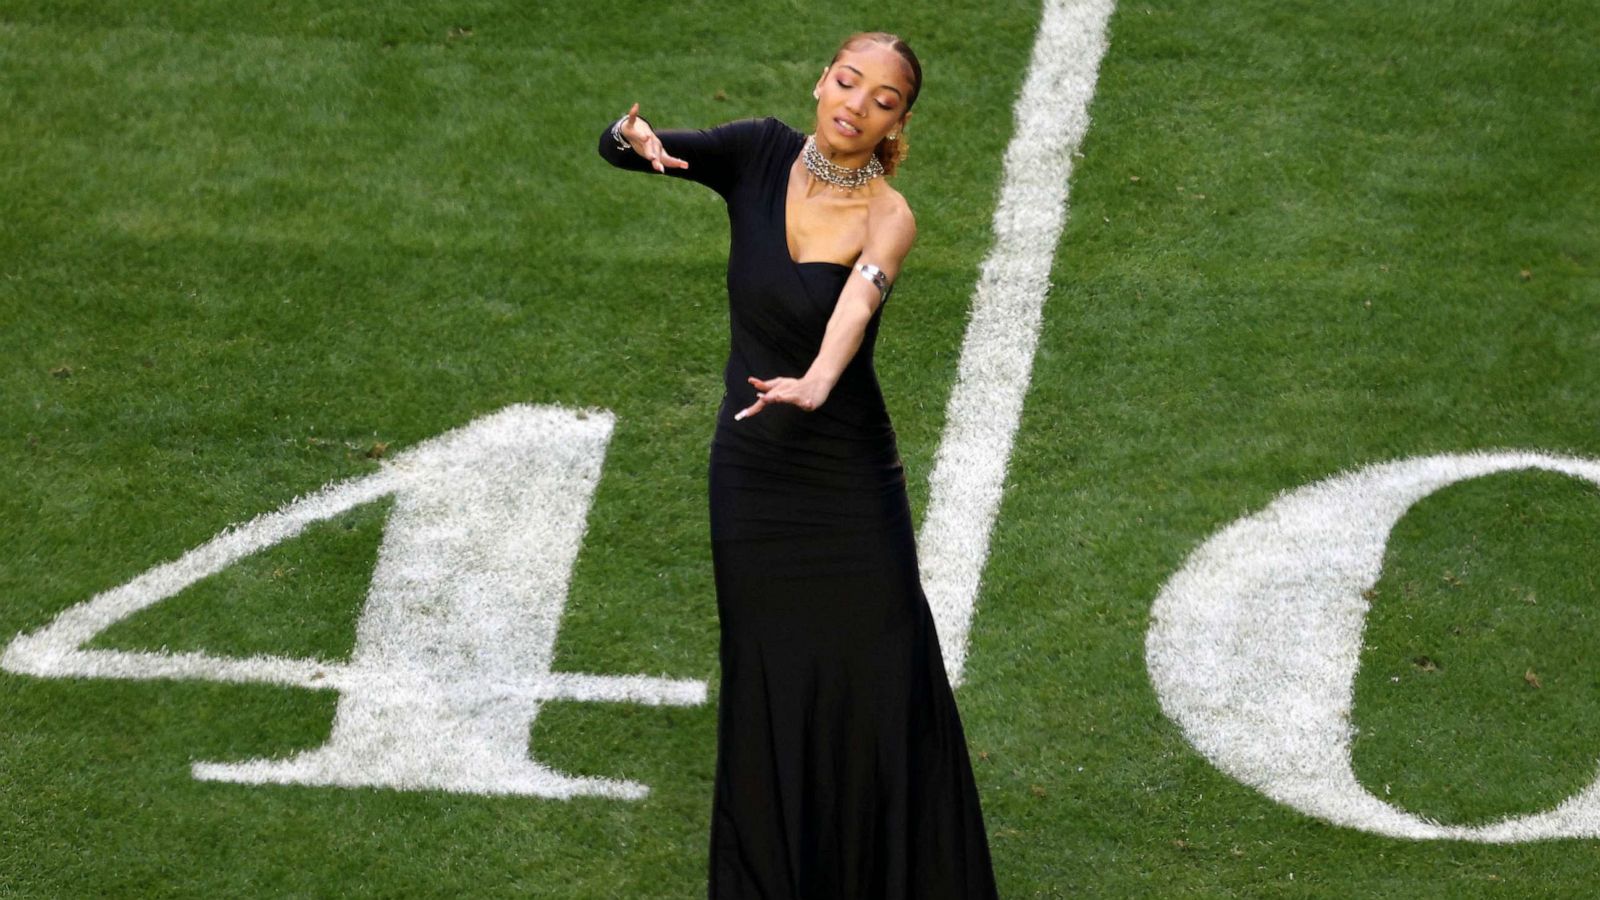 ASL performer goes viral during Rihanna's Super Bowl halftime show Morning America